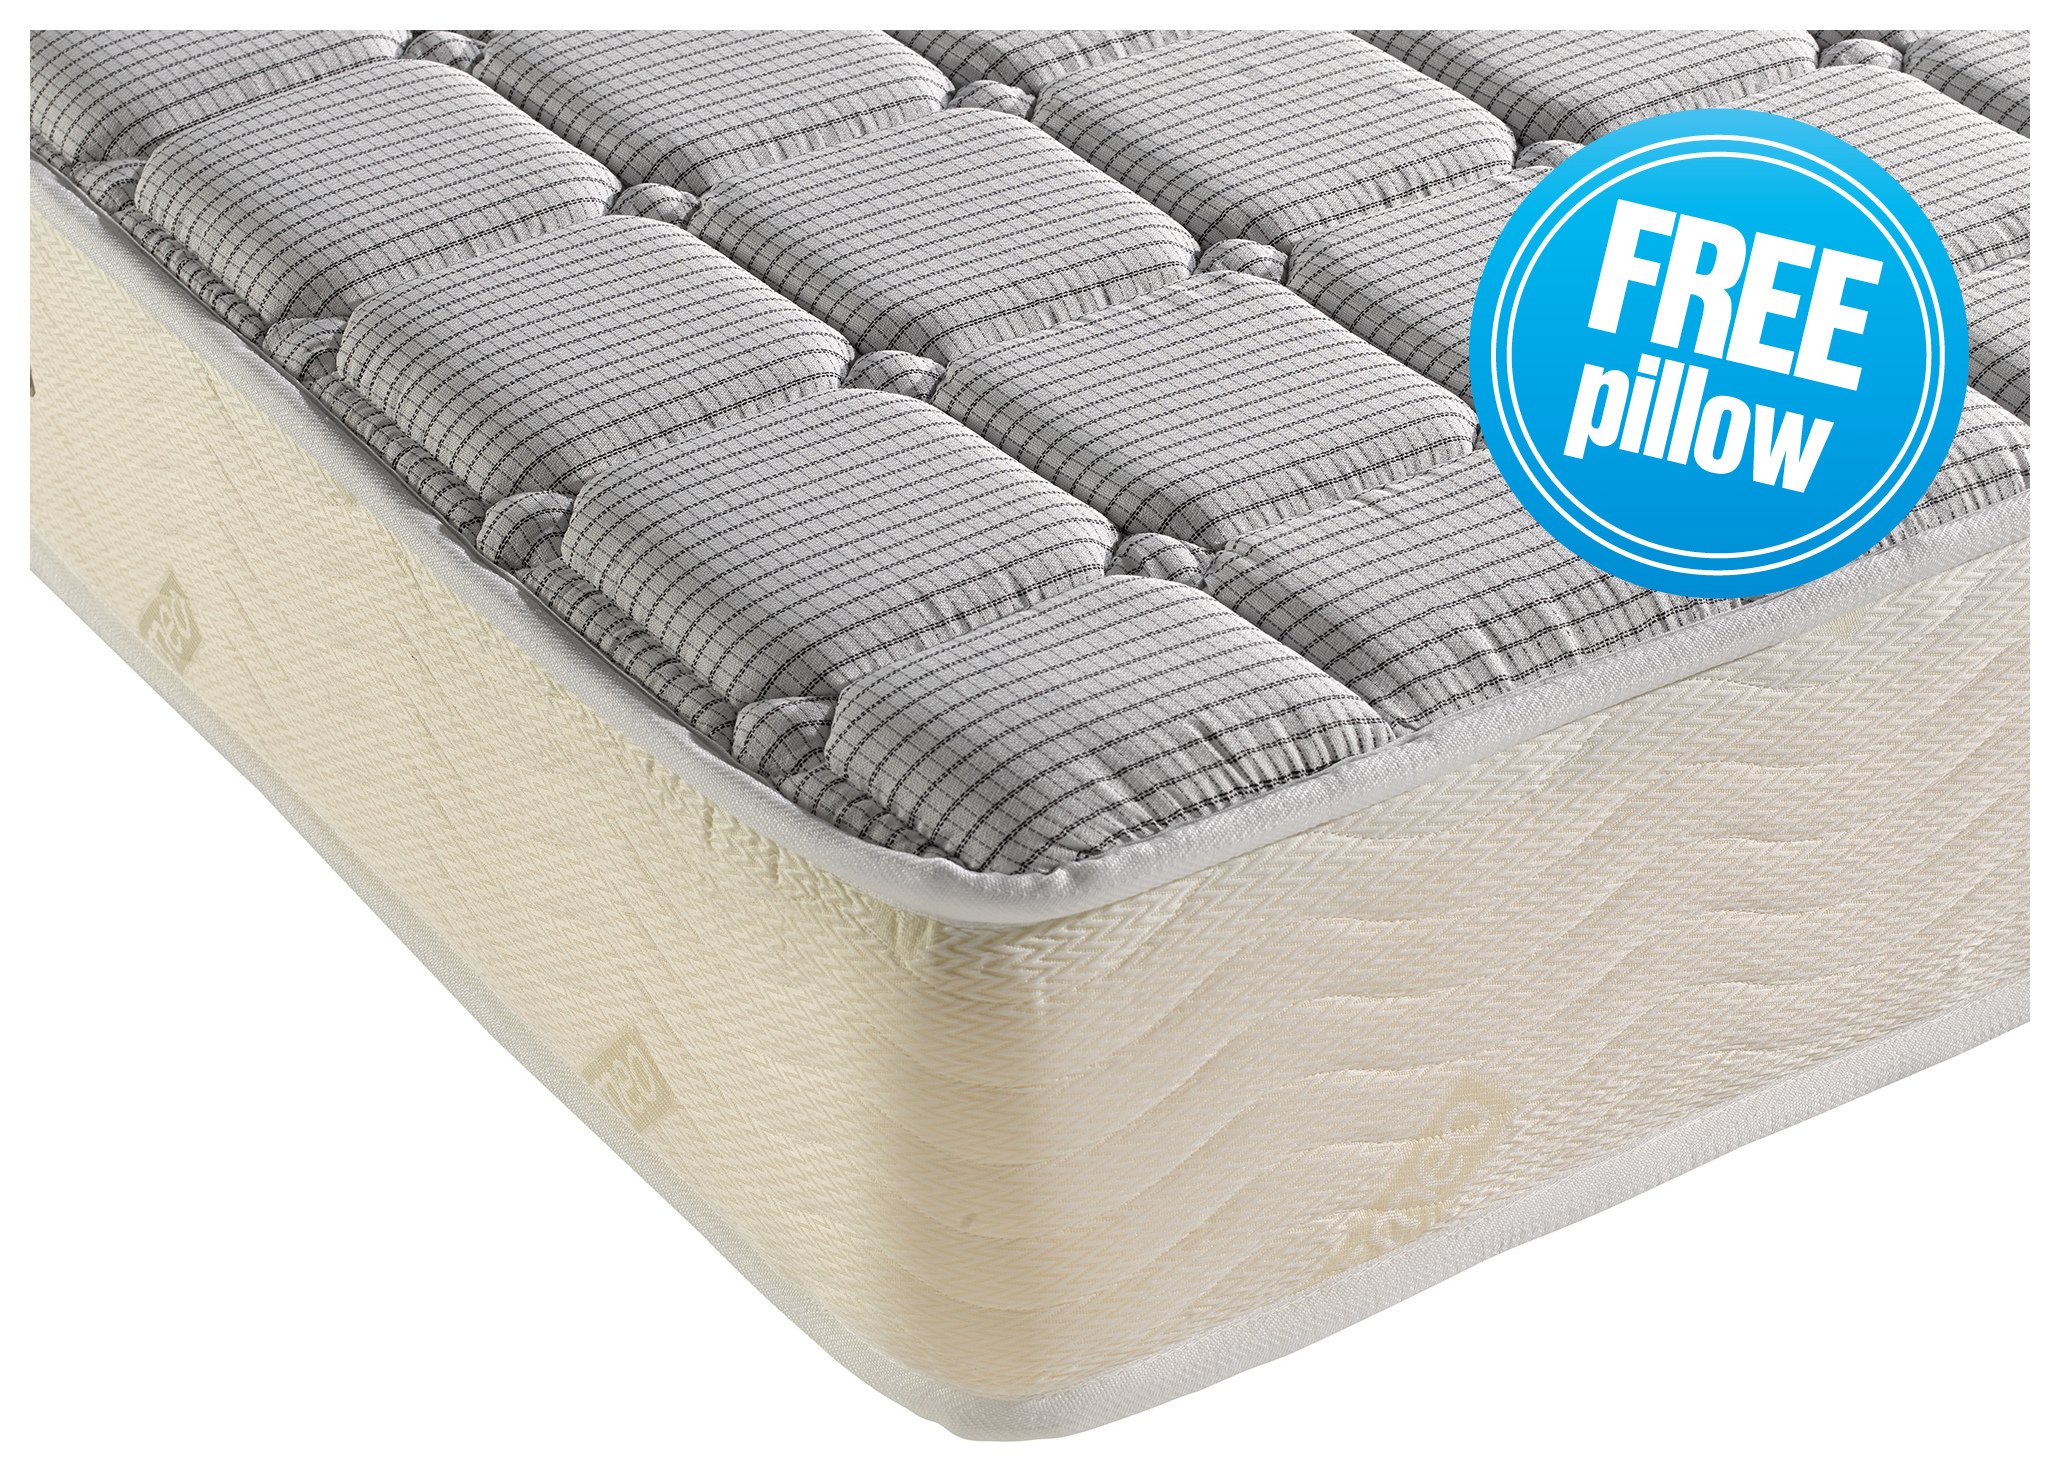 dormeo fresh plus memory foam mattress review